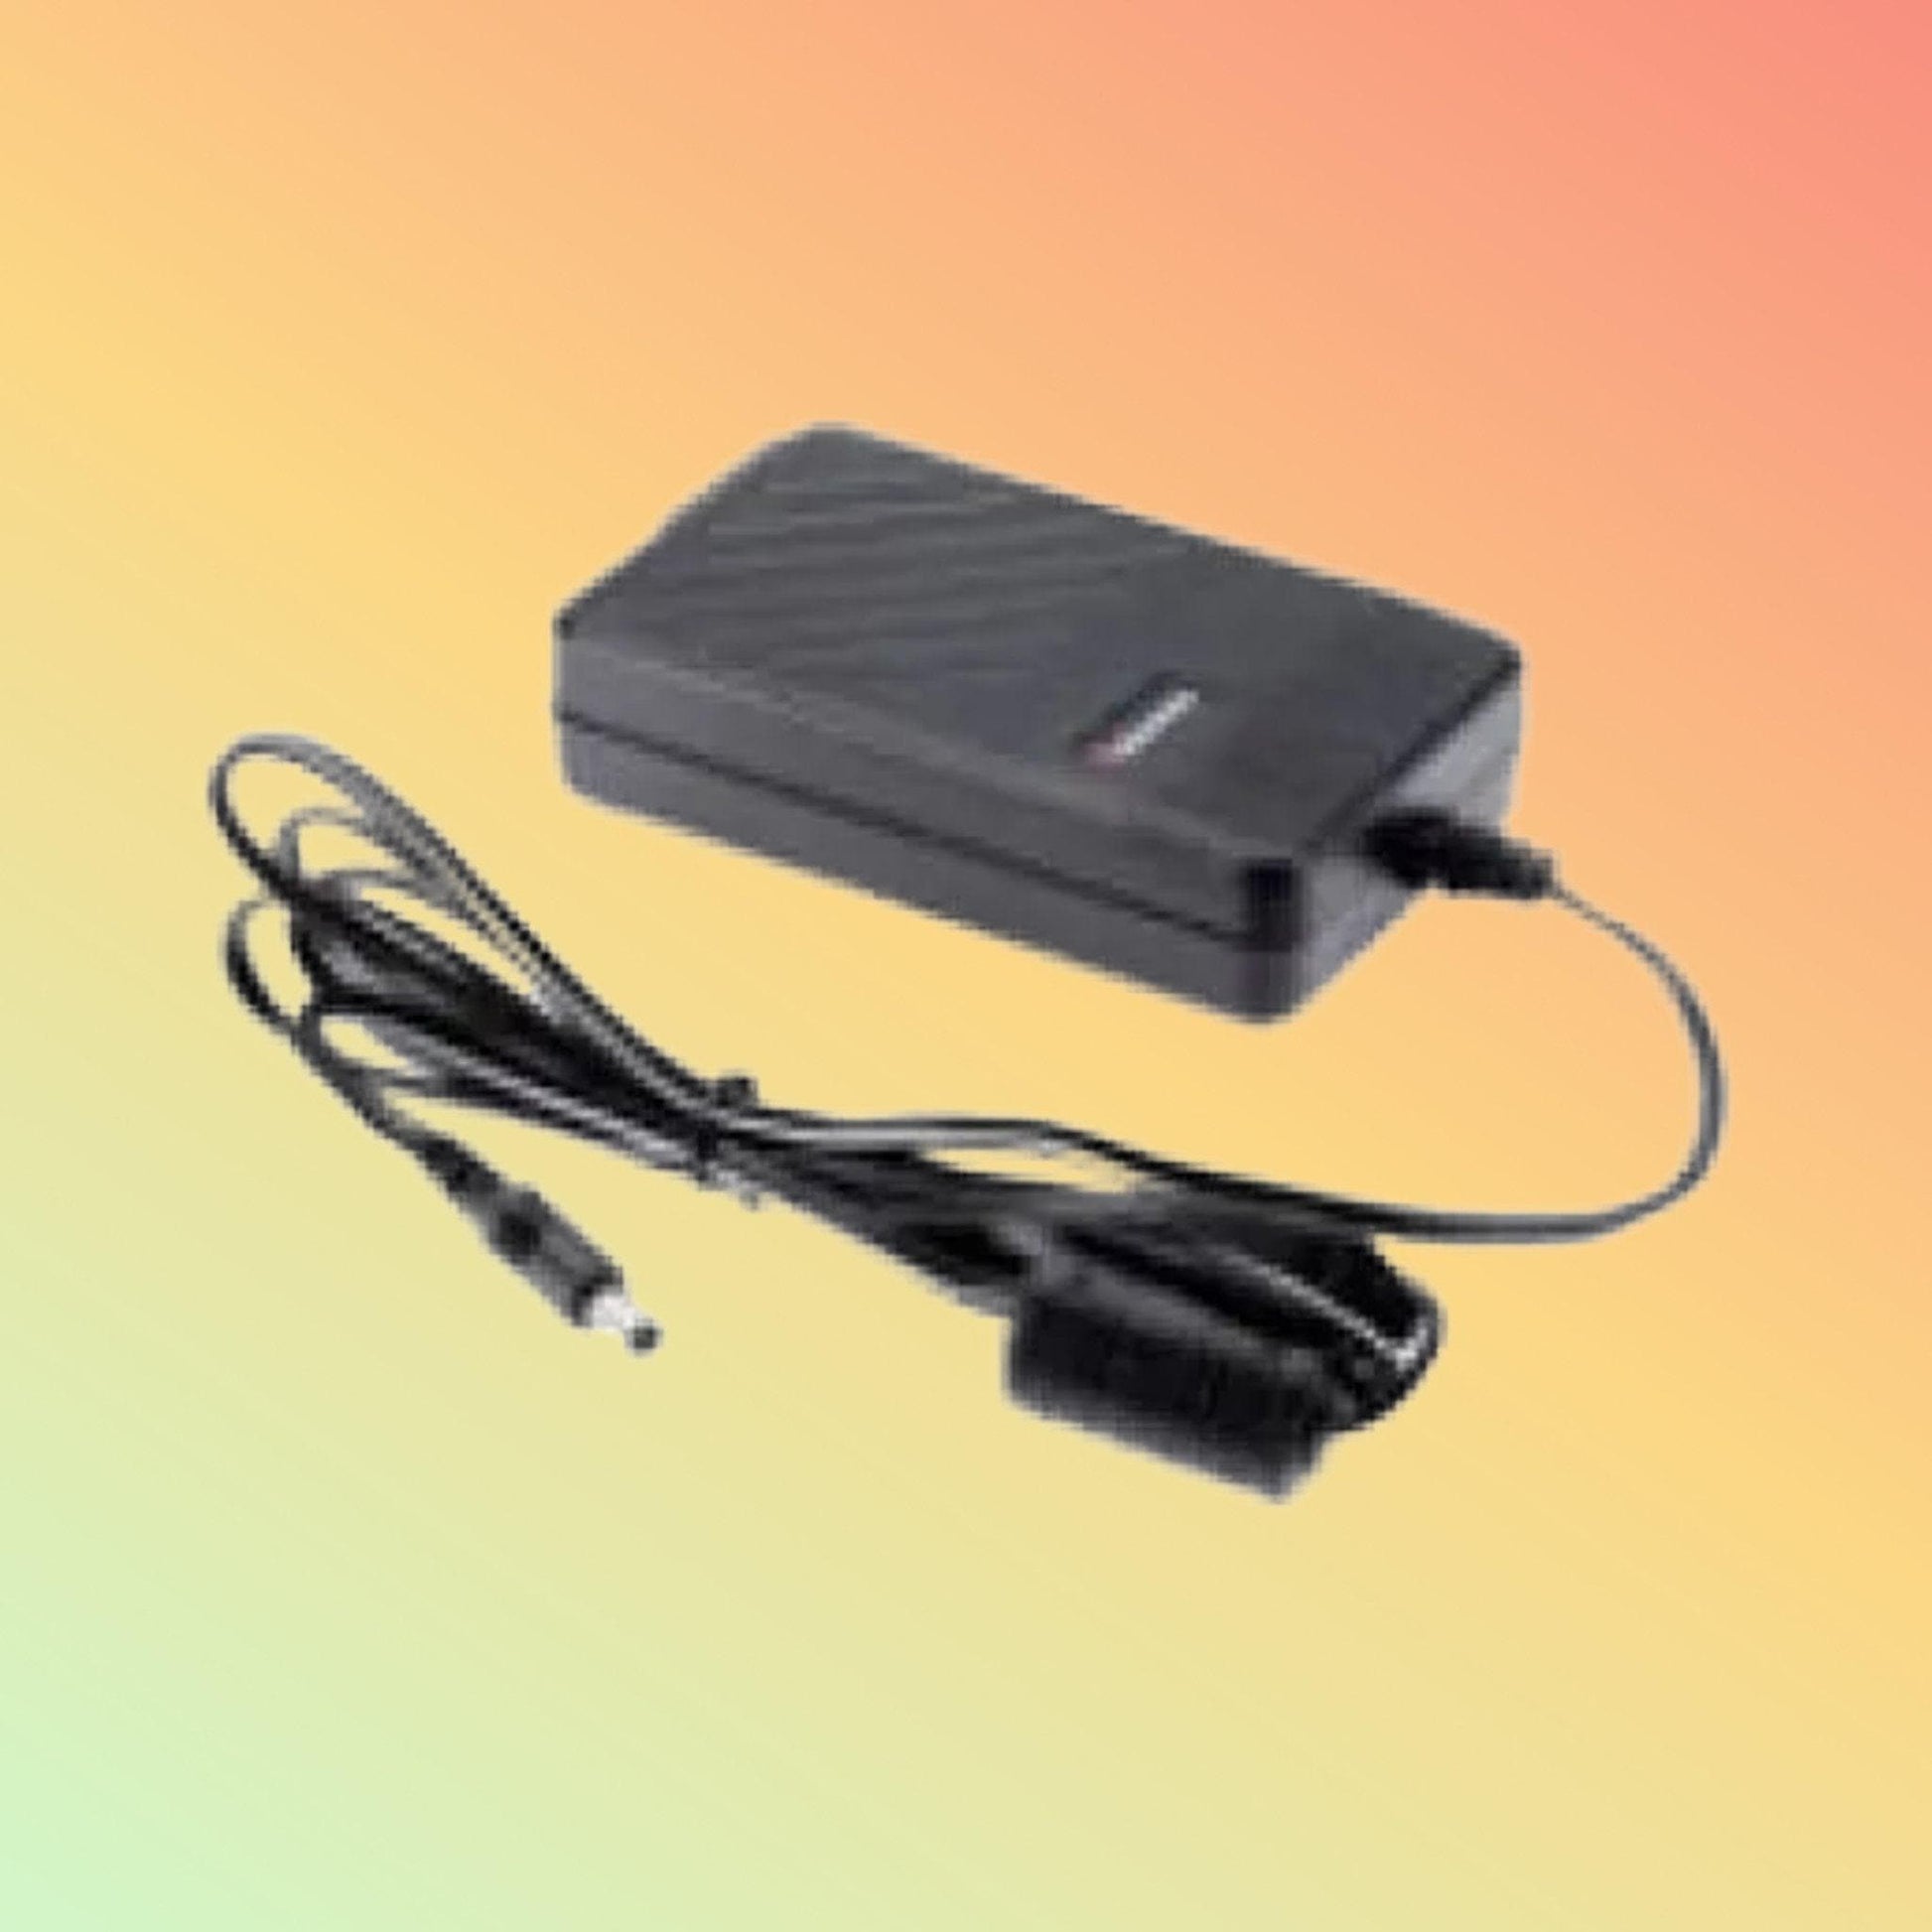 Power Adapter - Intermac 851-082-205 - Neotech